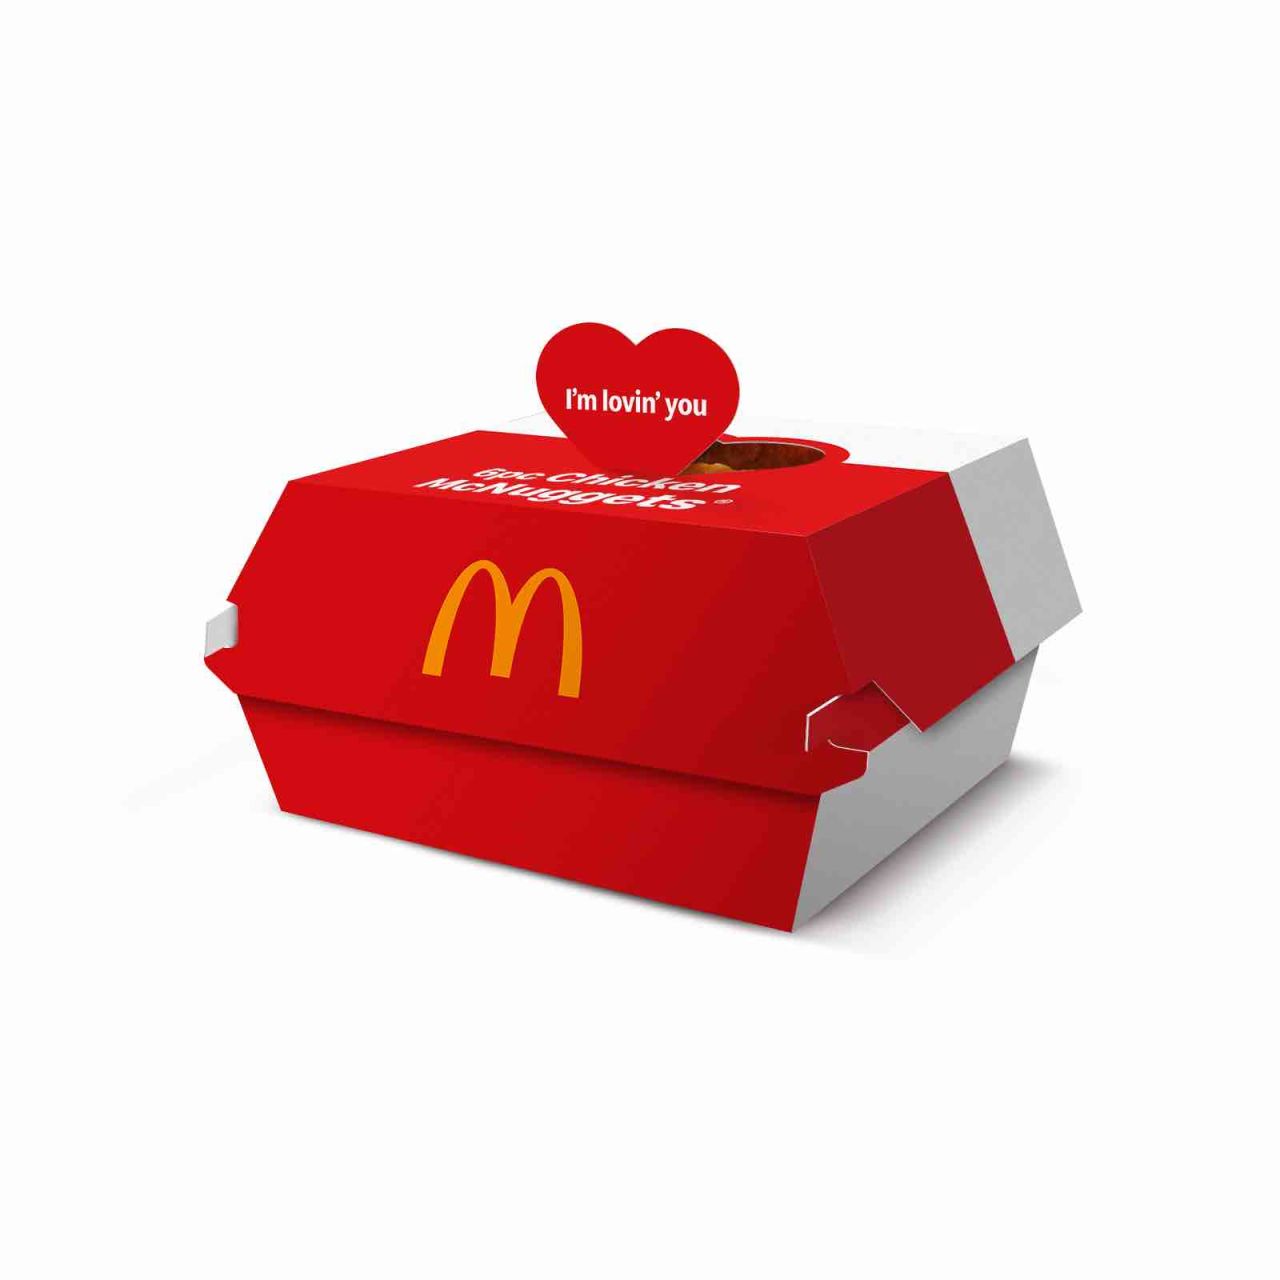 Image supplied. McDonald's Australia Chicken McNuggets, Valentine's box